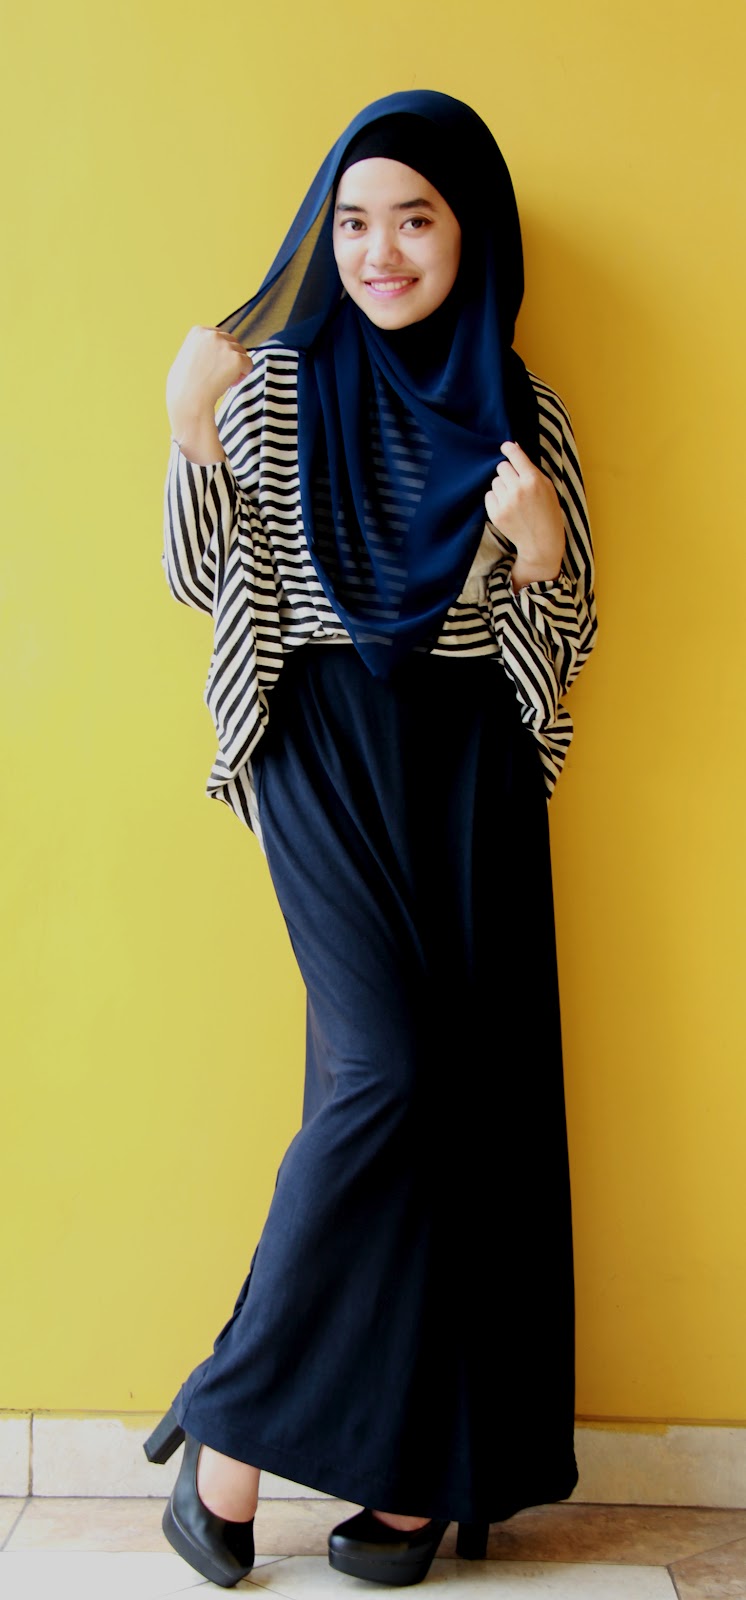  Model  Baju  Muslim Casual  Stripped Tutorial Hijab